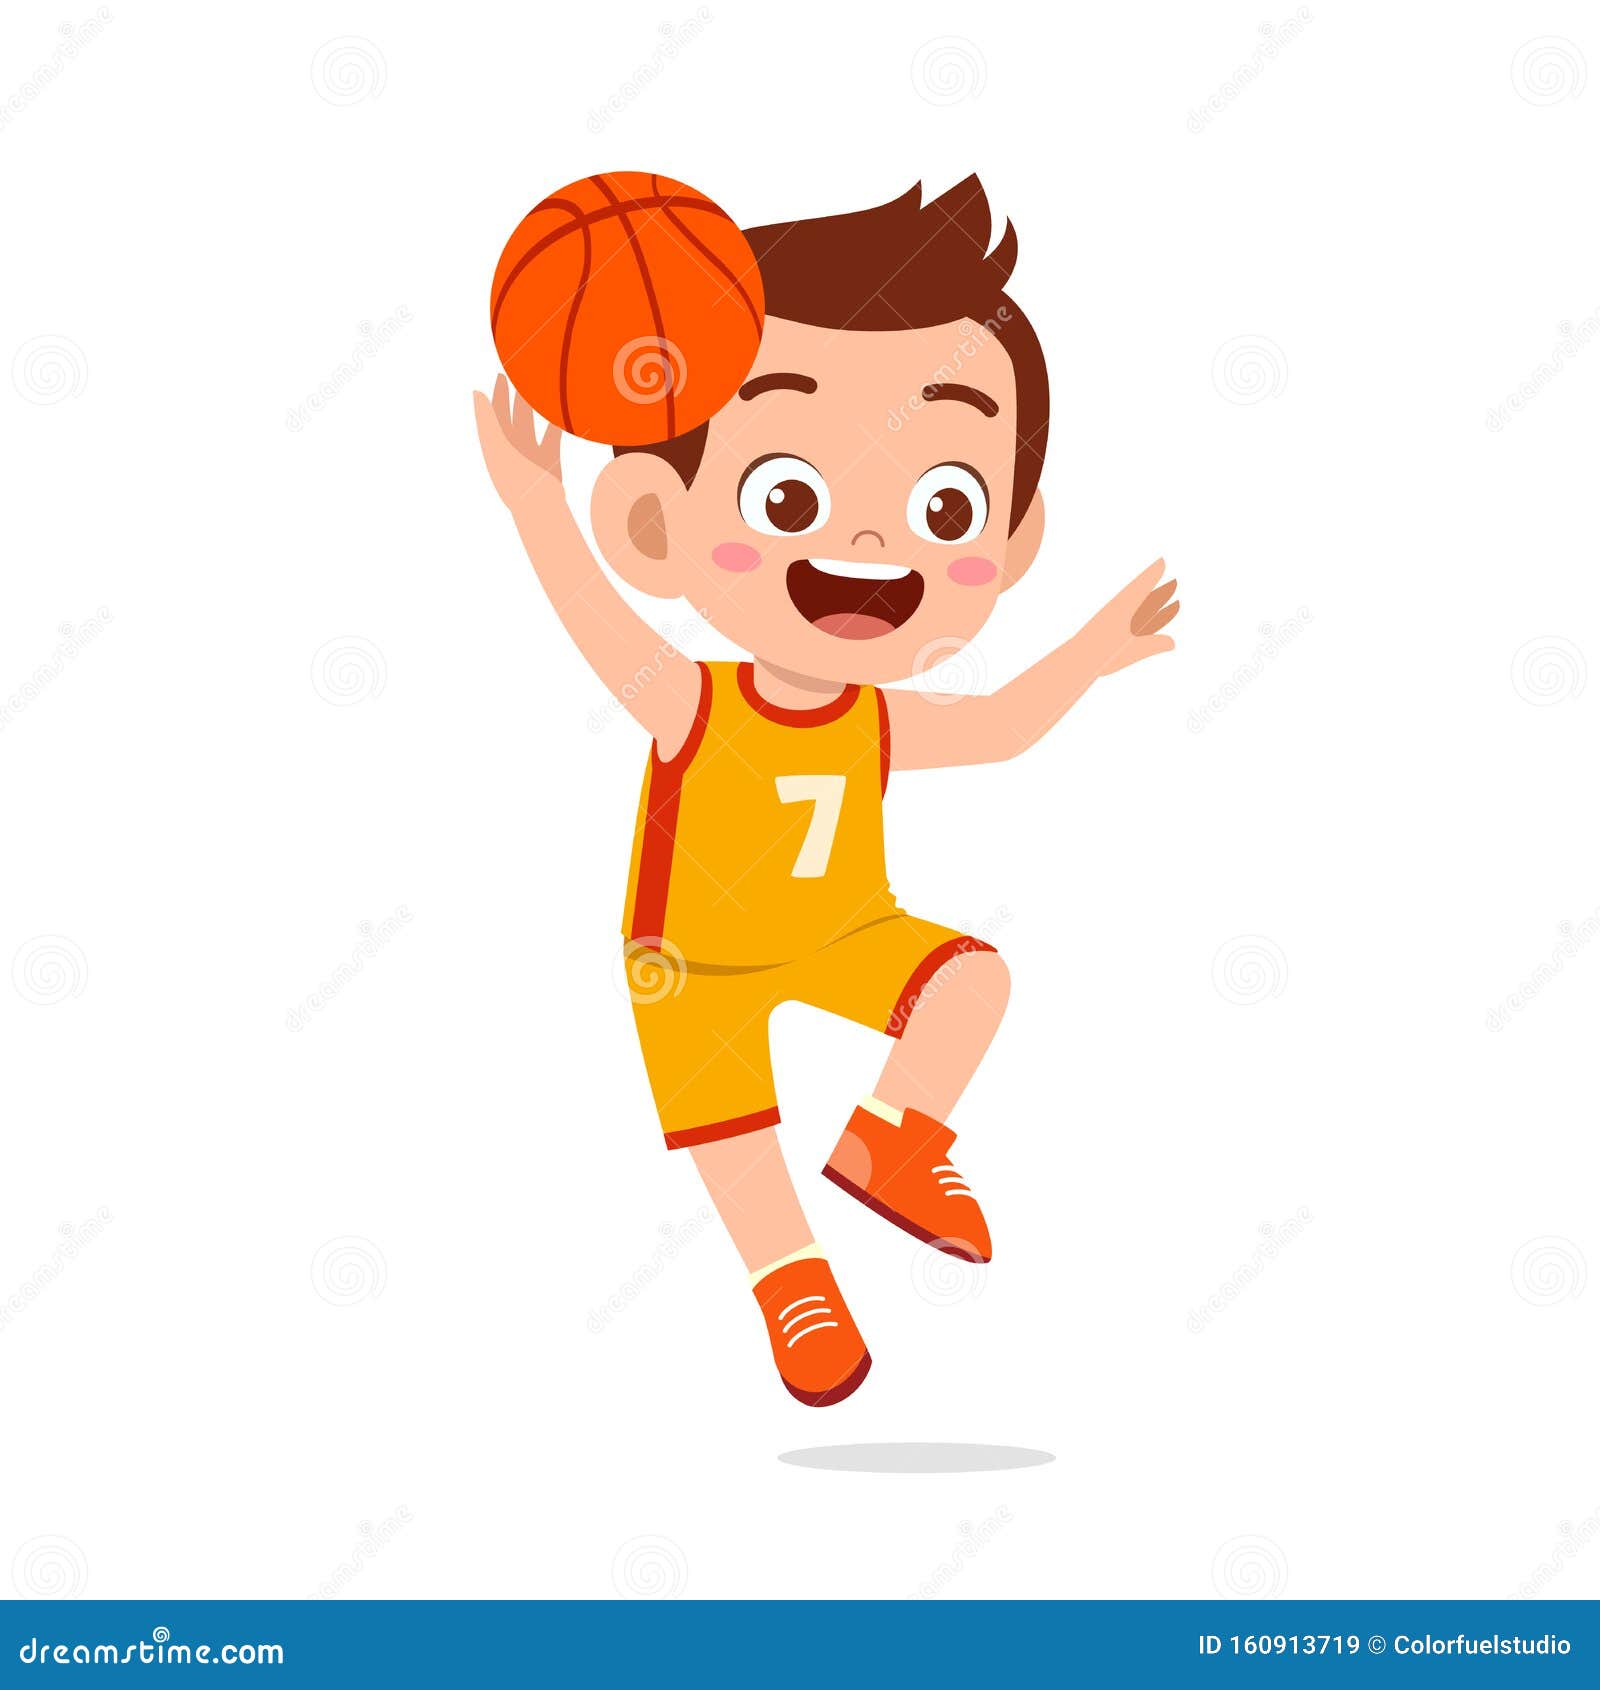 Cartoon cute little boy playing basketball Vector Image